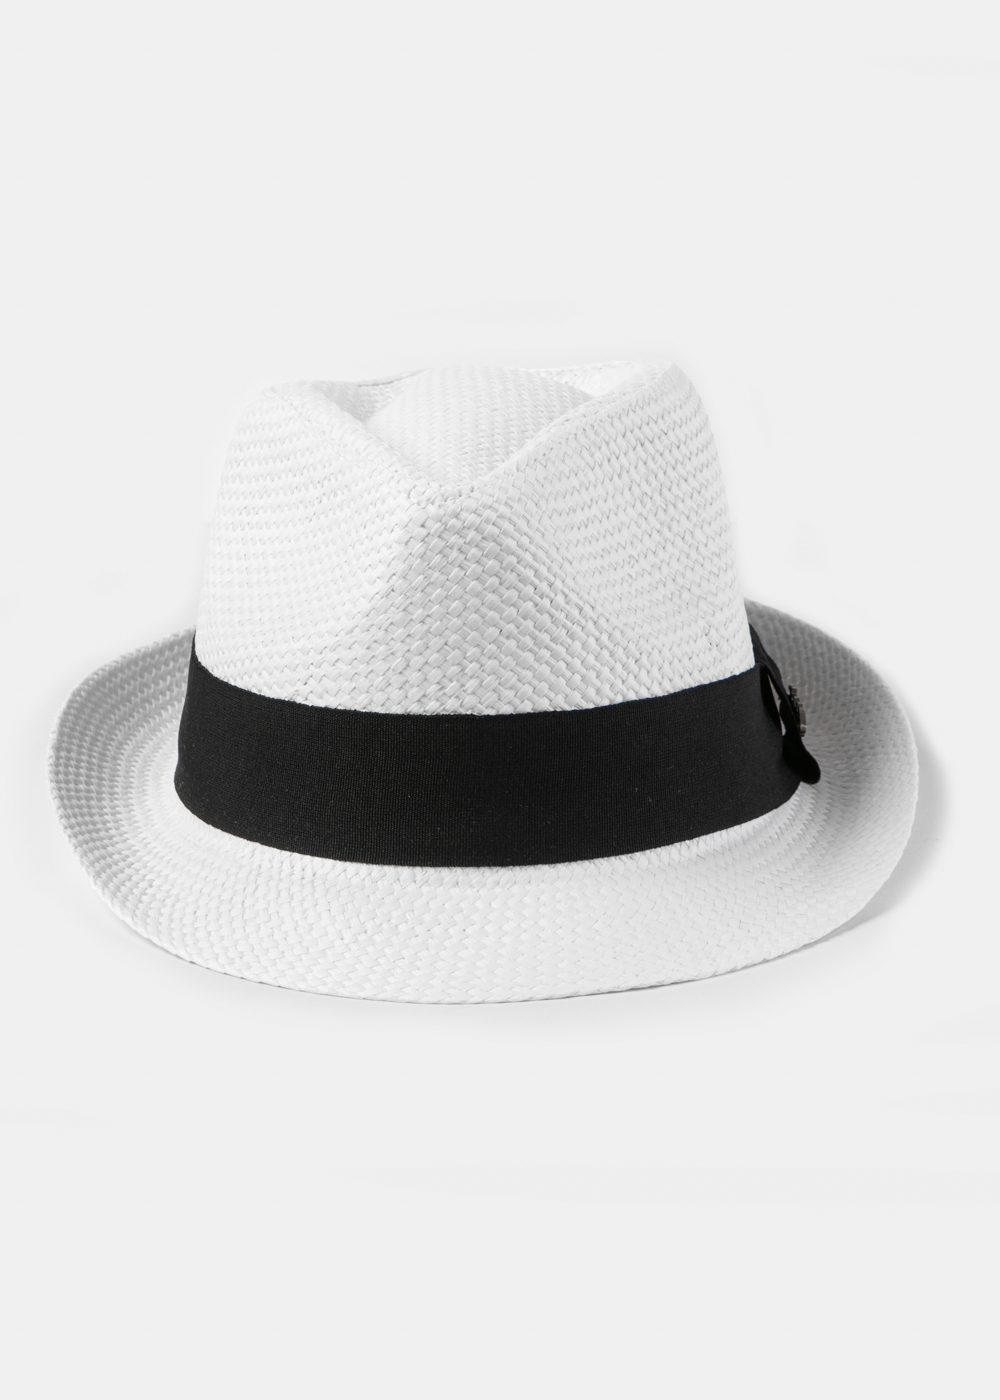 White Fedora Hat w/ black hatband 2